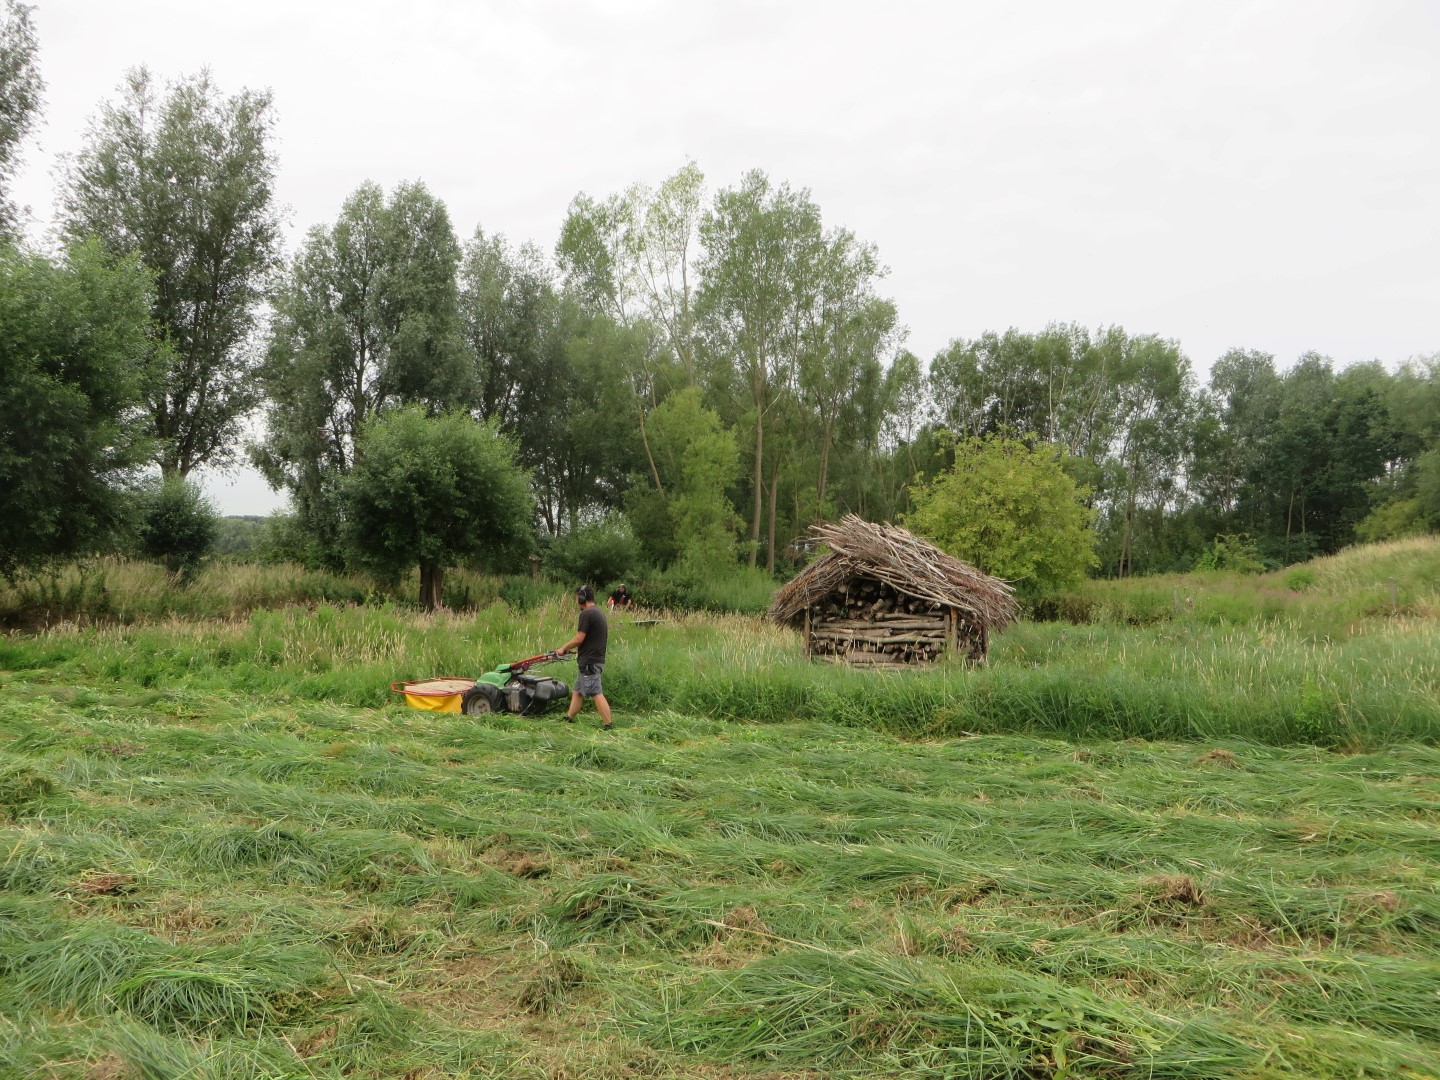 maaien in Rotersmeers juli 2017